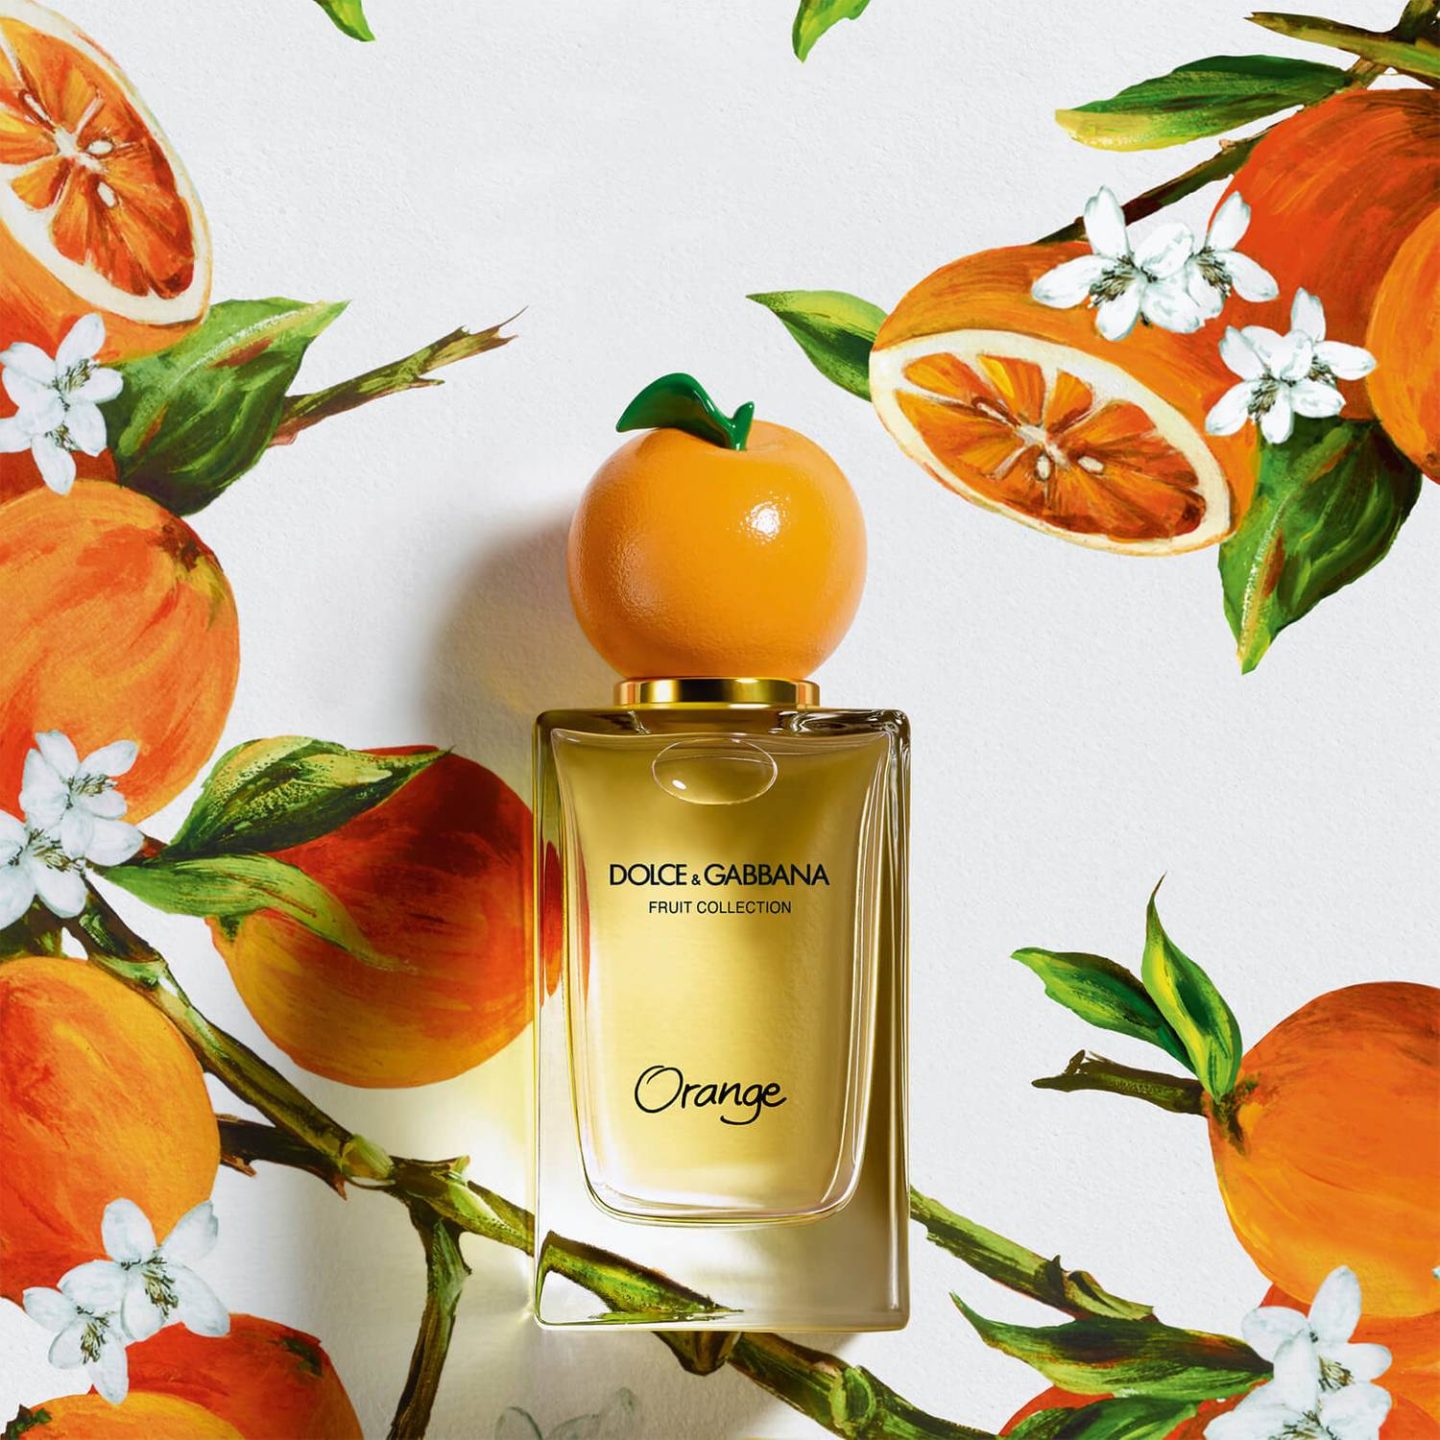 Dolce-Gabbana-Fruit-Collection-Nước hoa cam cam